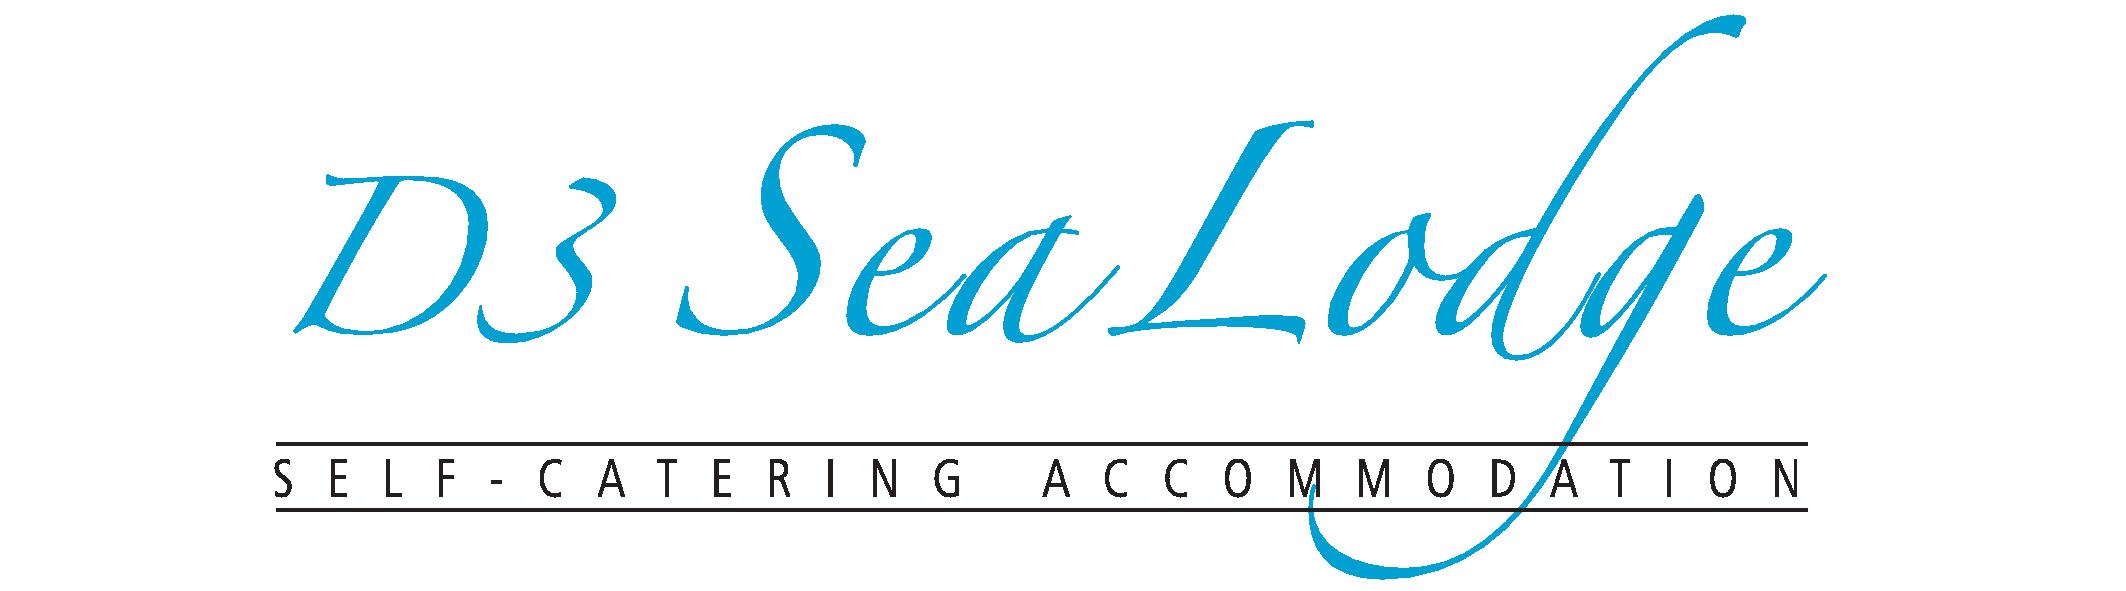 D3 Sea Lodge - Luxury self catering duplex Apartment - Umhlanga